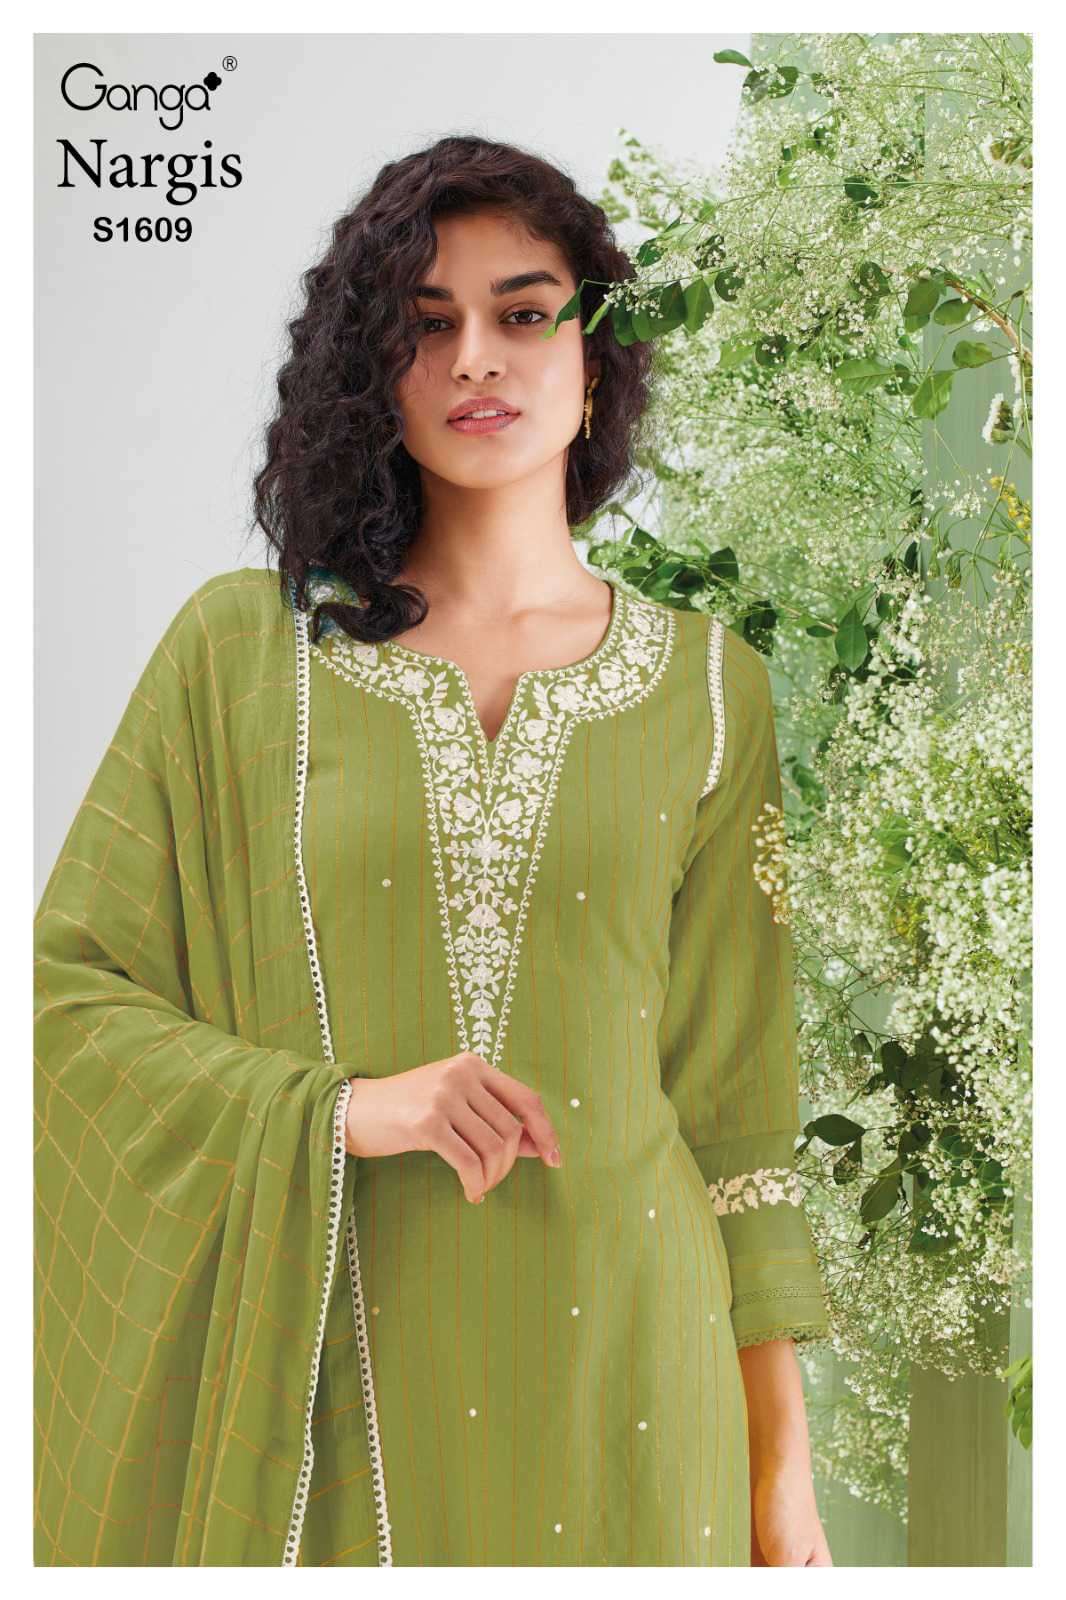 Ganga Nargis 1609 Festive Wear Jacquard Cotton Suits Branded Designs